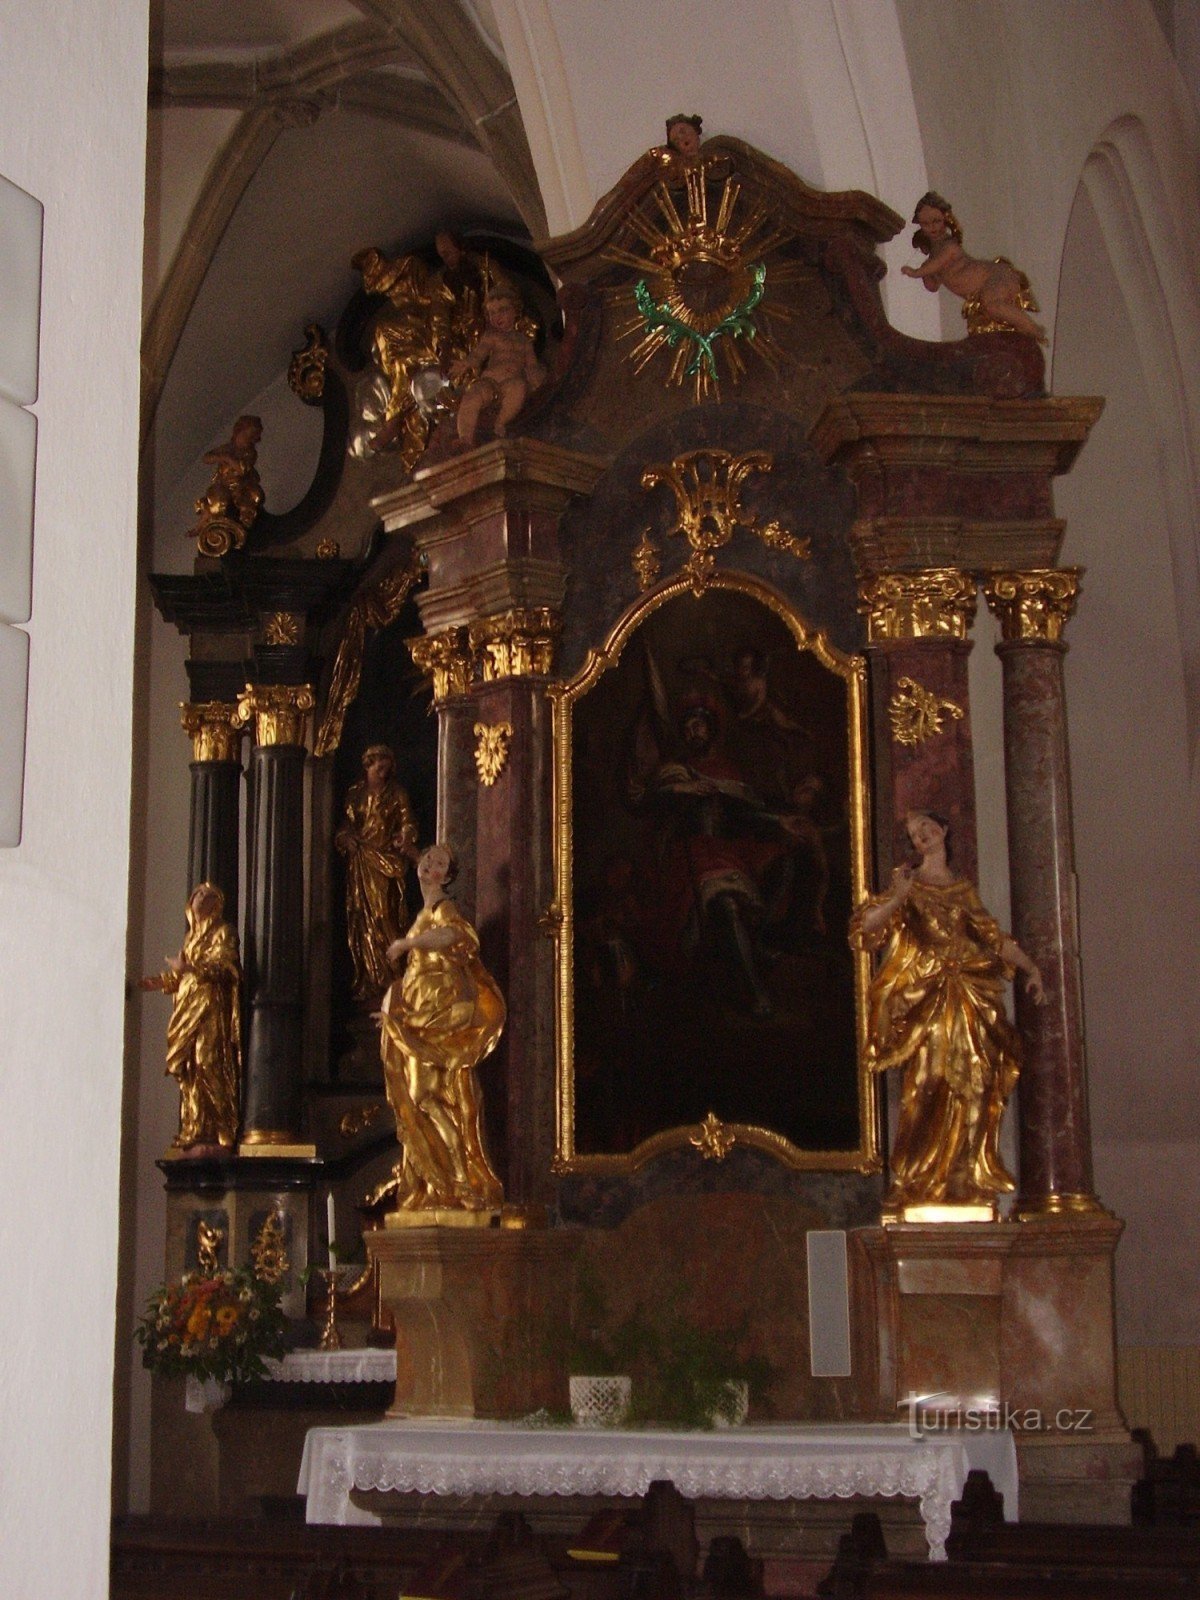 Besichtigung der Kirche Mariä Himmelfahrt in Ivančice - Innenraum